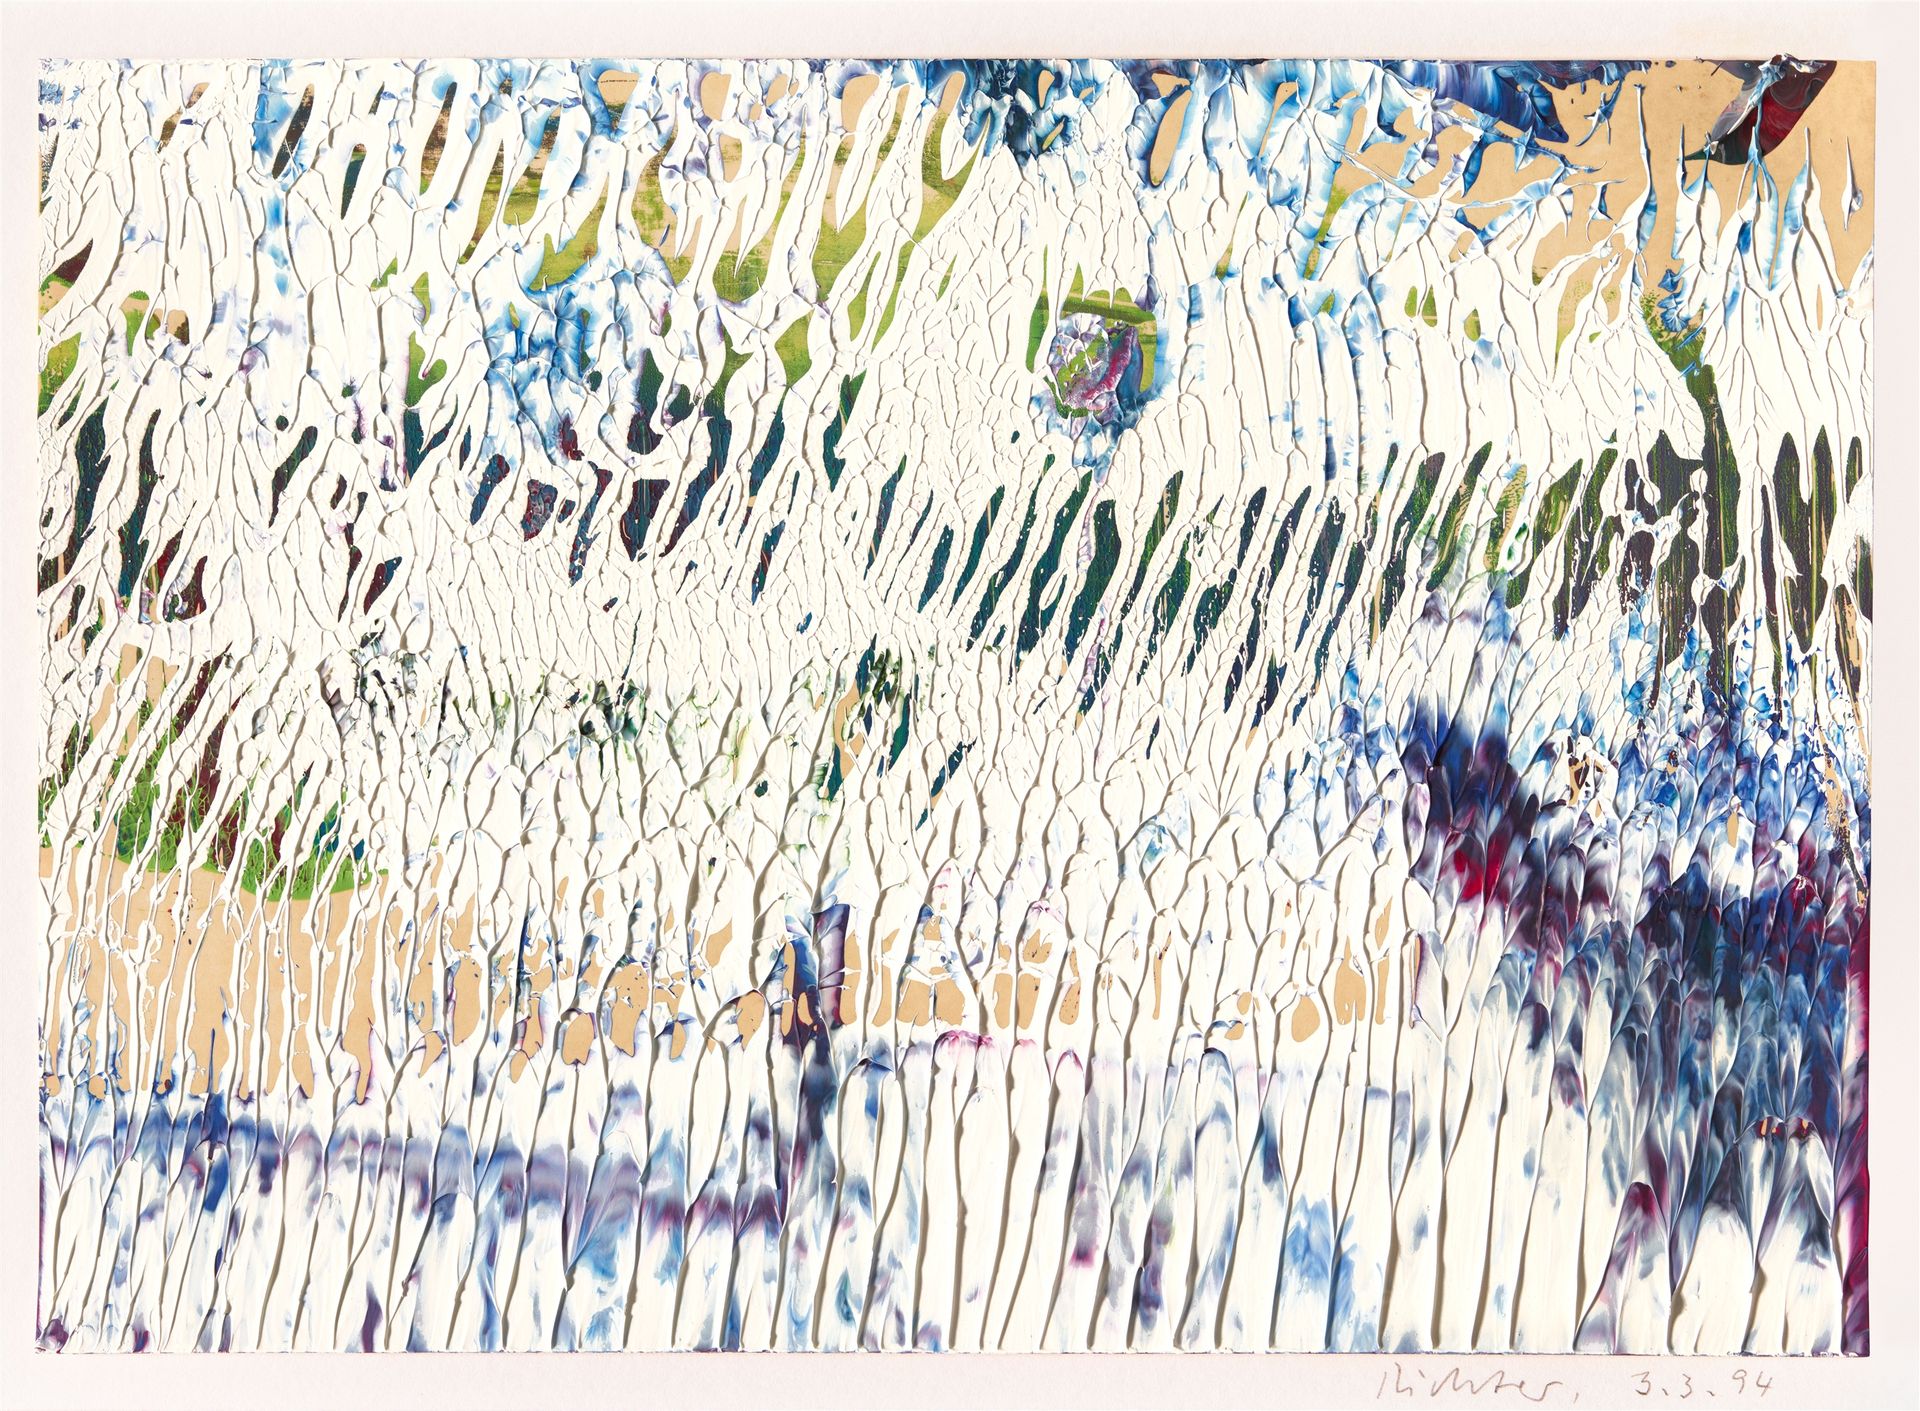 Gerhard Richter Gerhard Richter



3.3.94

1994



Óleo sobre cartón 21 x 29,8 c&hellip;